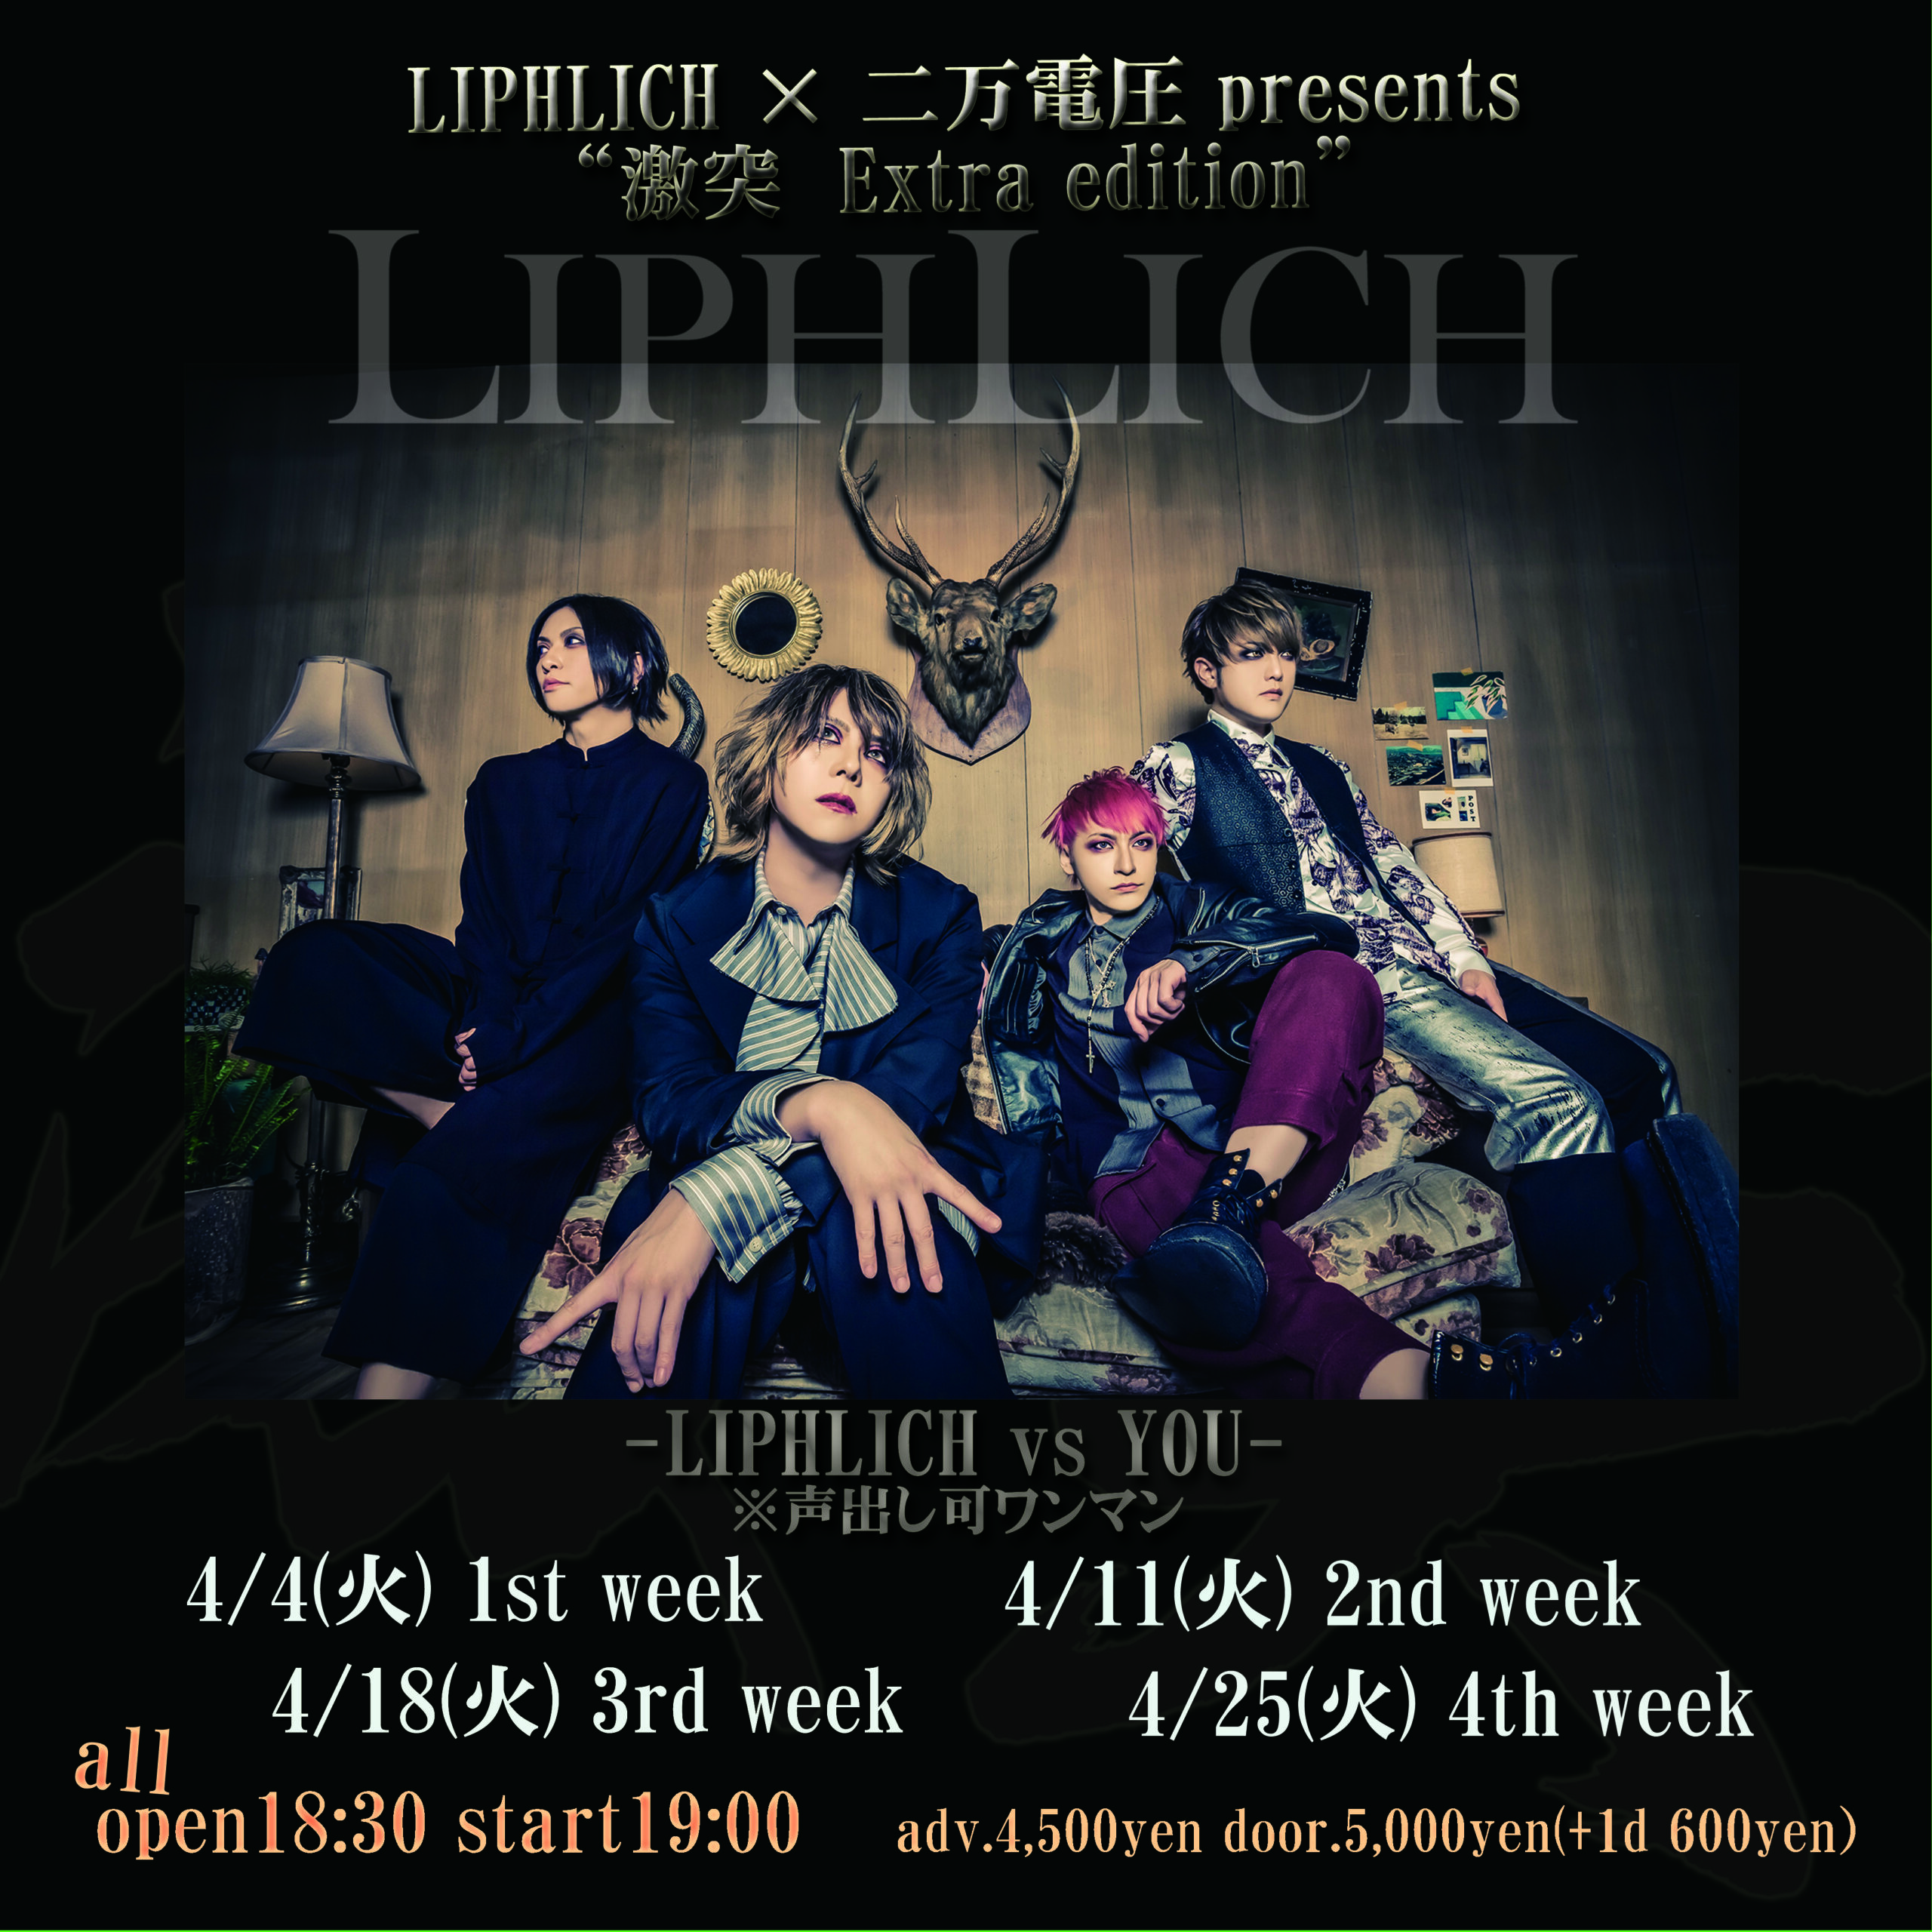 LIPHLICH × 二万電圧 presents ”激突 Extra edition” -LIPHLICH vs YOU 1st week-  ※声出し可ワンマン